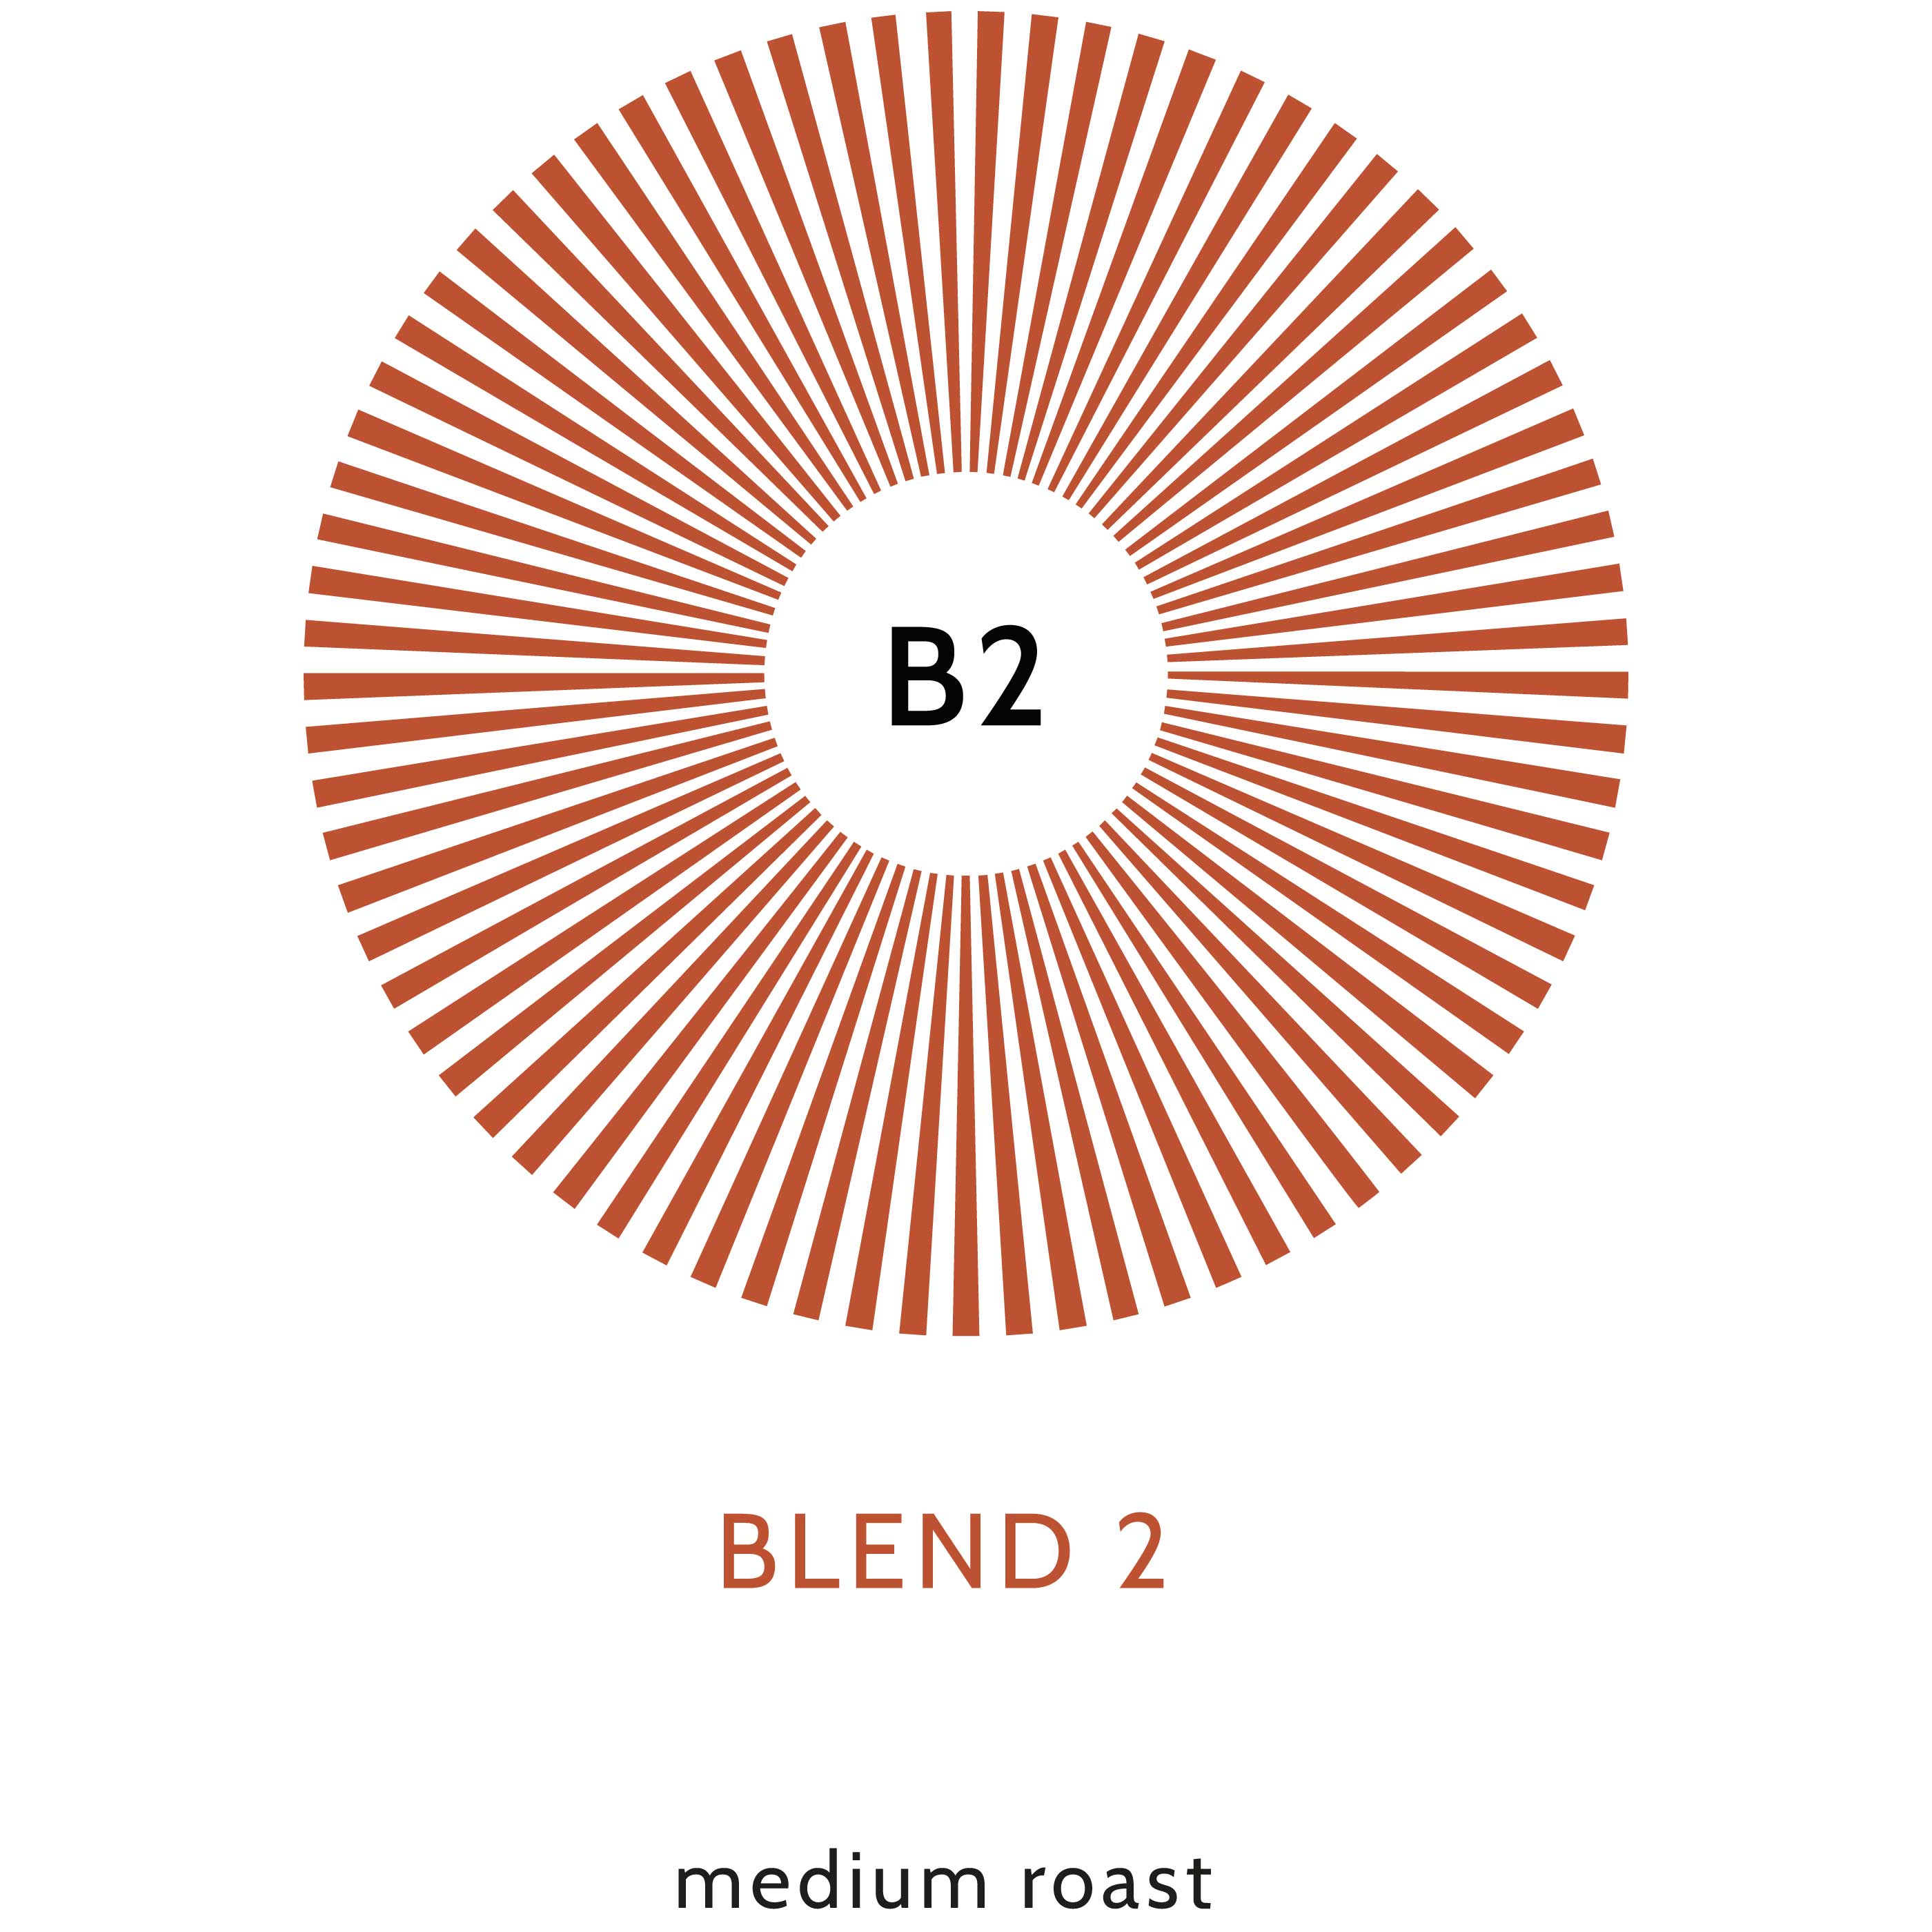 B 2 - espresso blend